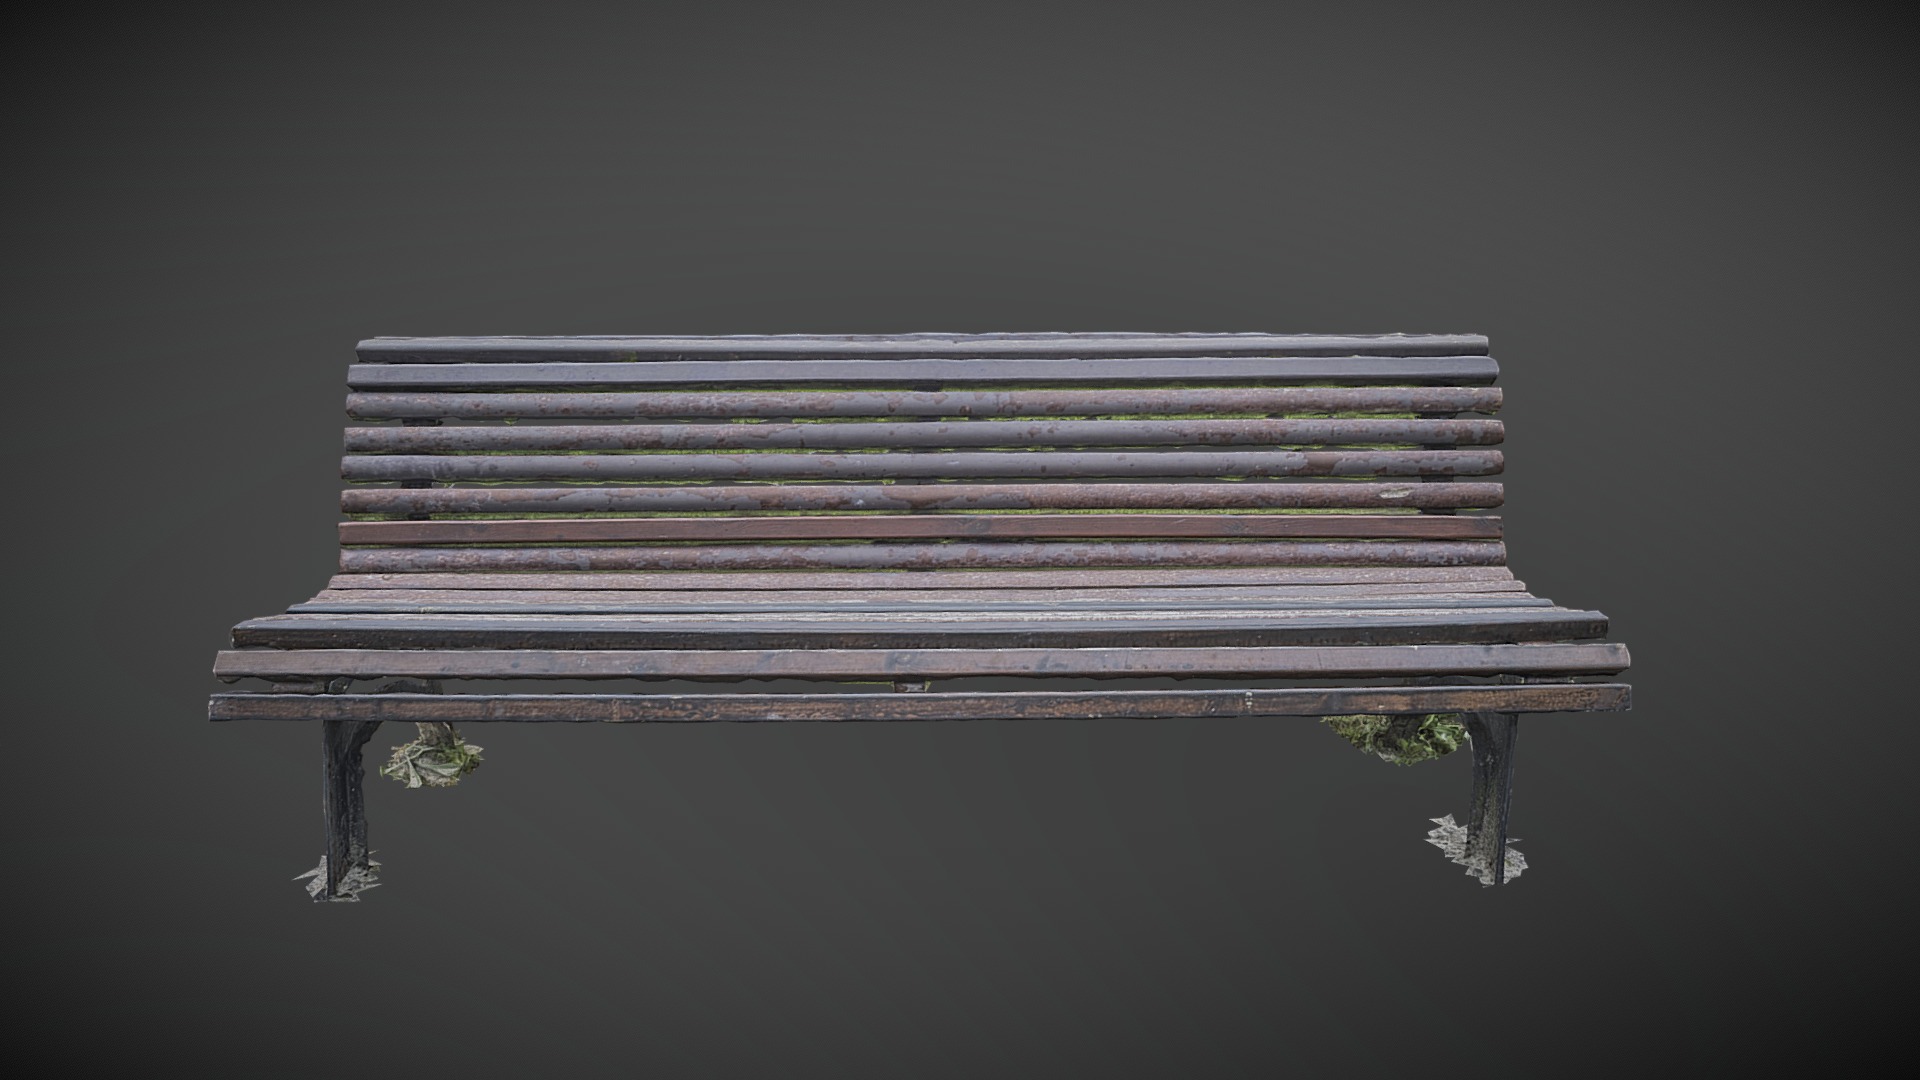 3D model Street park bench  photogrammetry scan - This is a 3D model of the Street park bench  photogrammetry scan. The 3D model is about a bench with a black background.